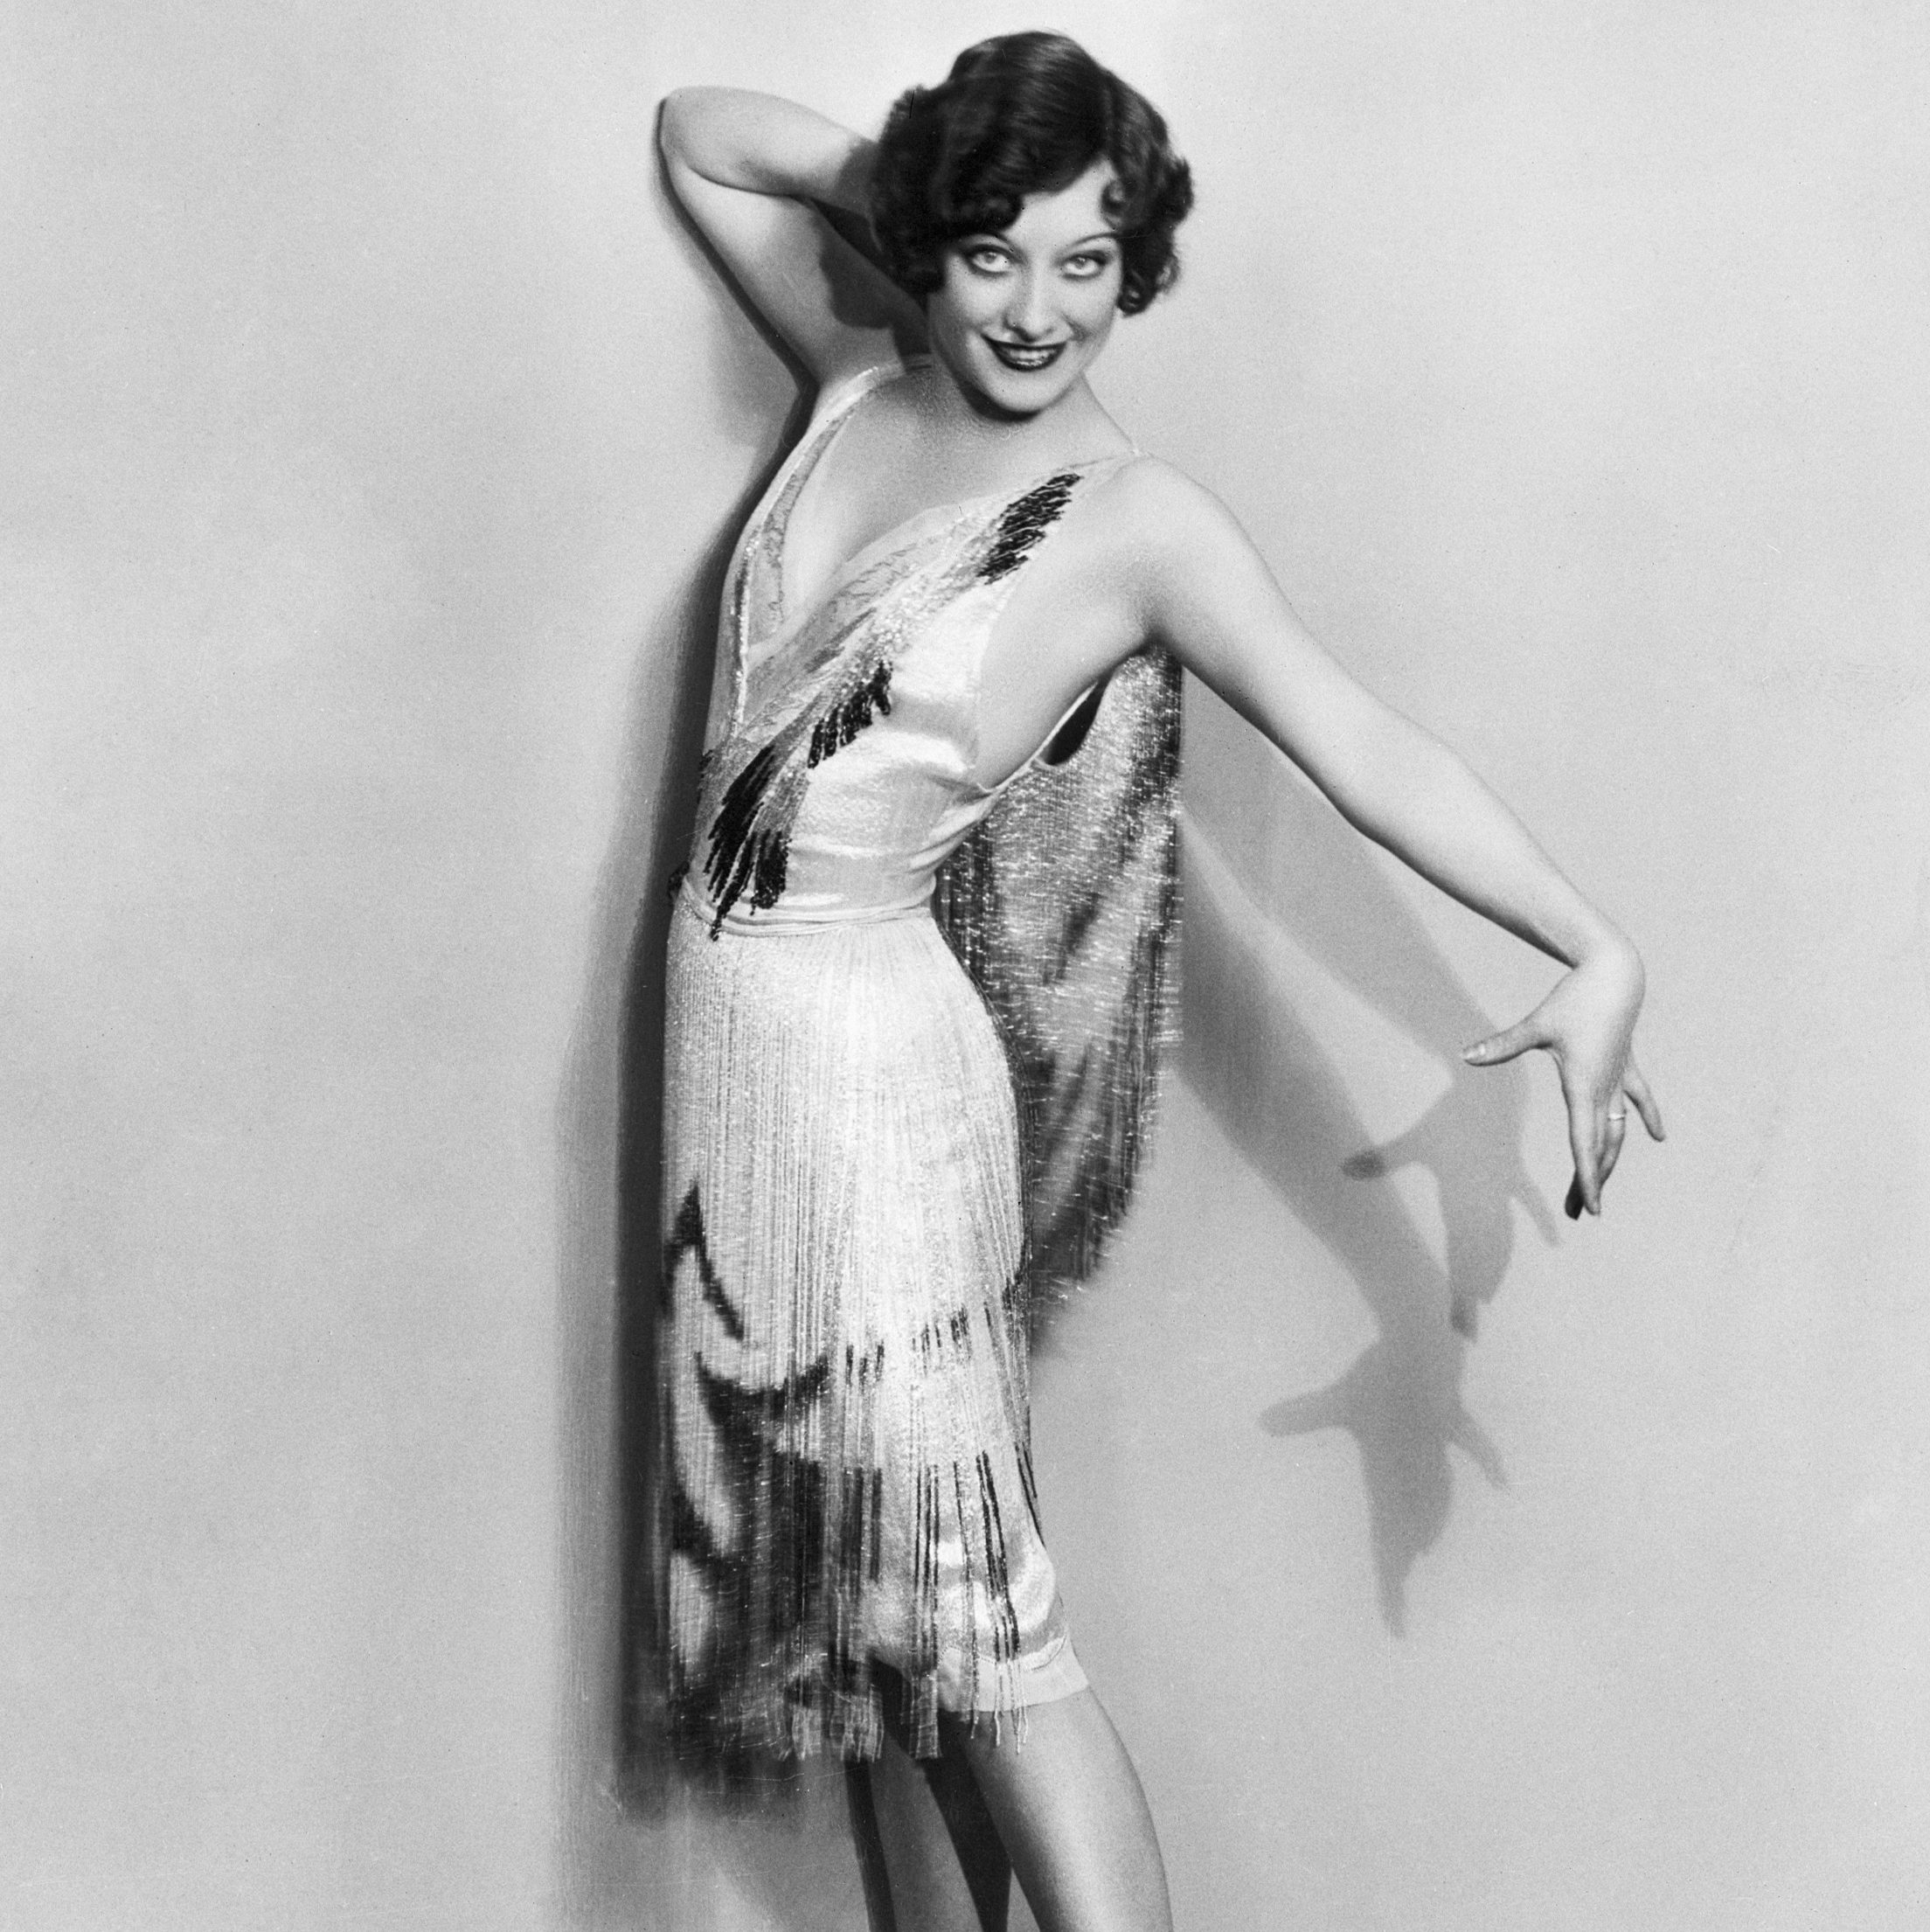 Joan Crawford in her flapper attire, 1920s